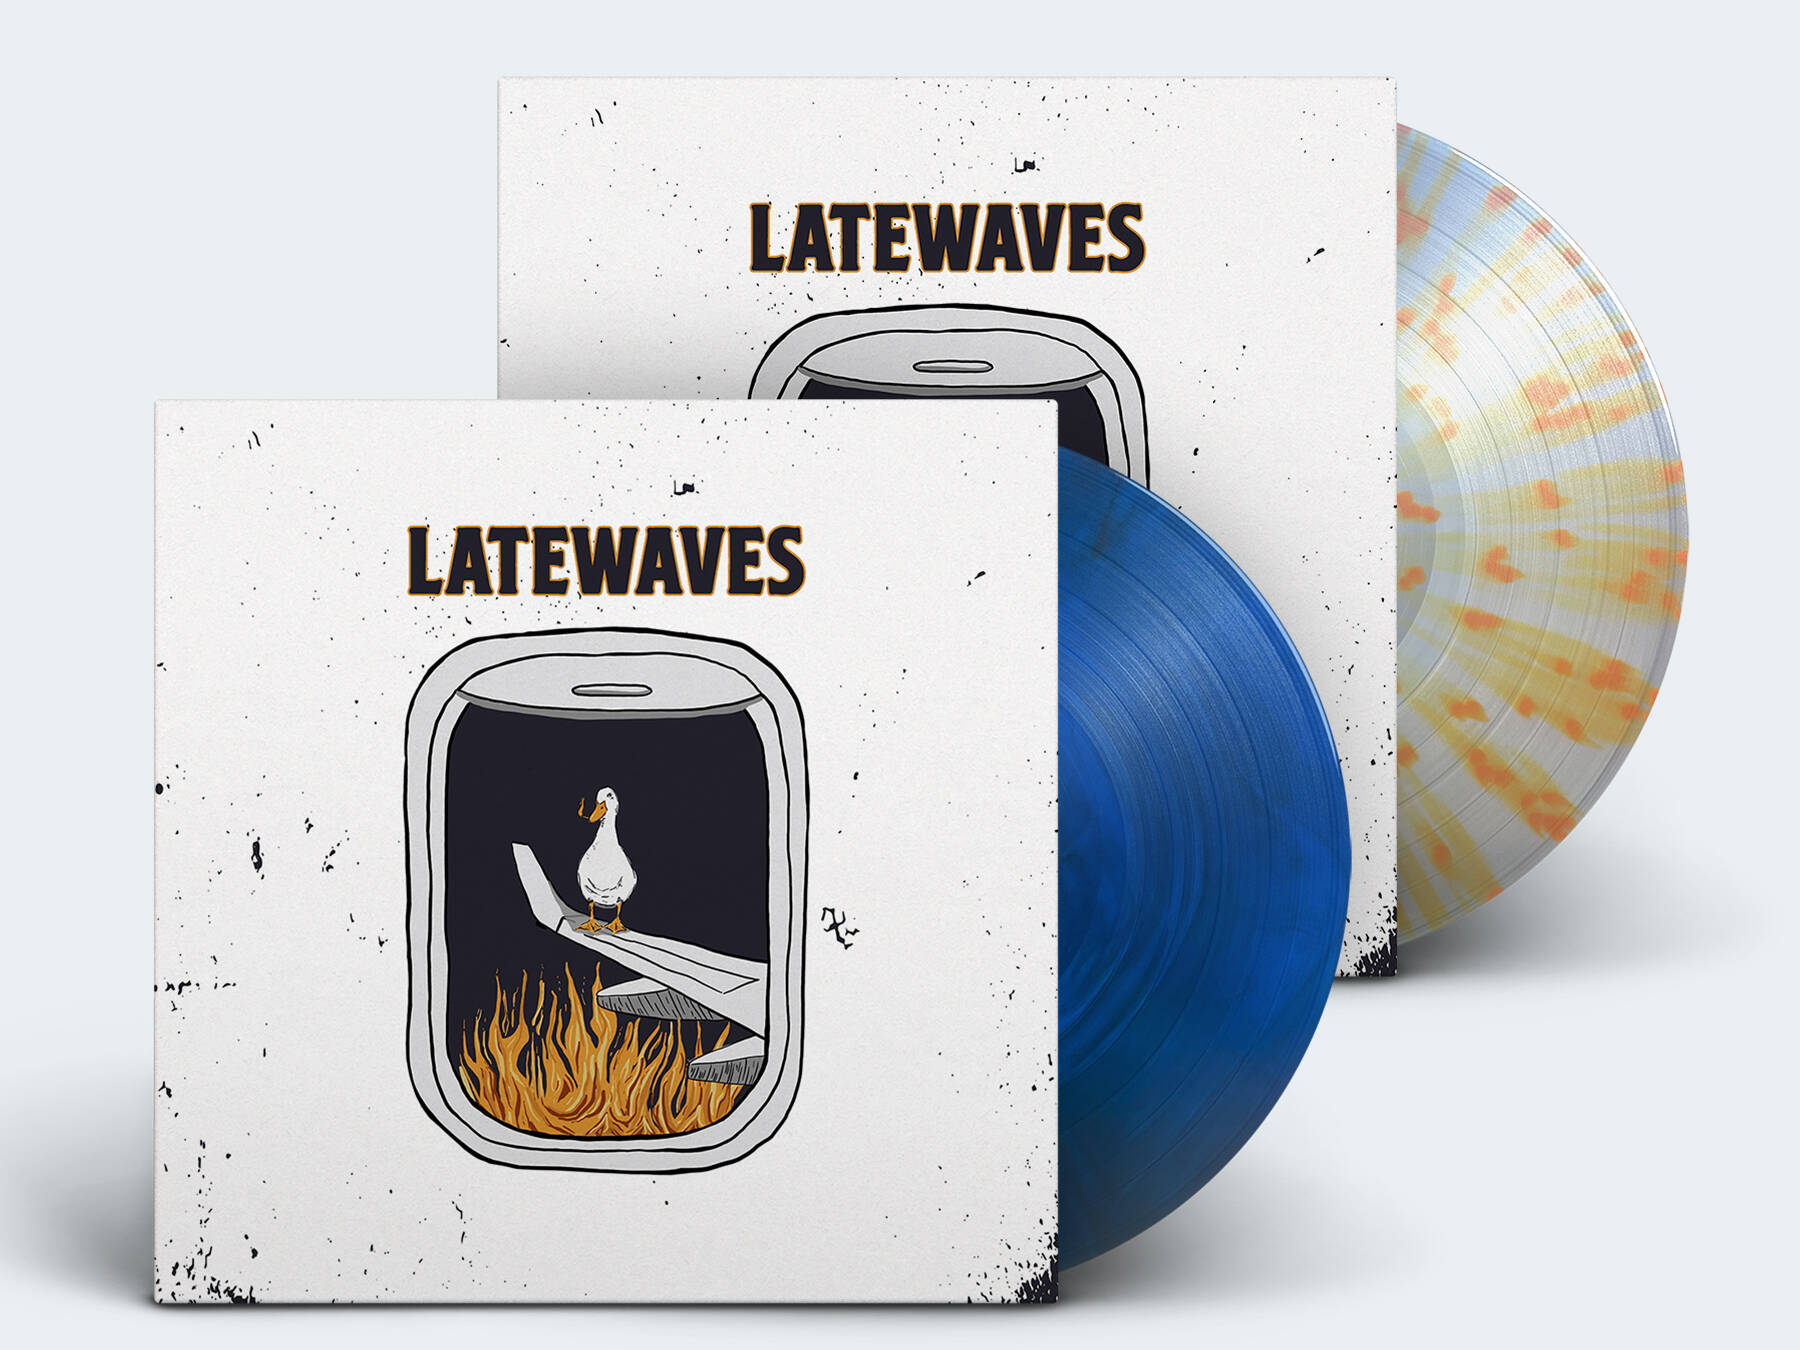 Latewaves vinylboth